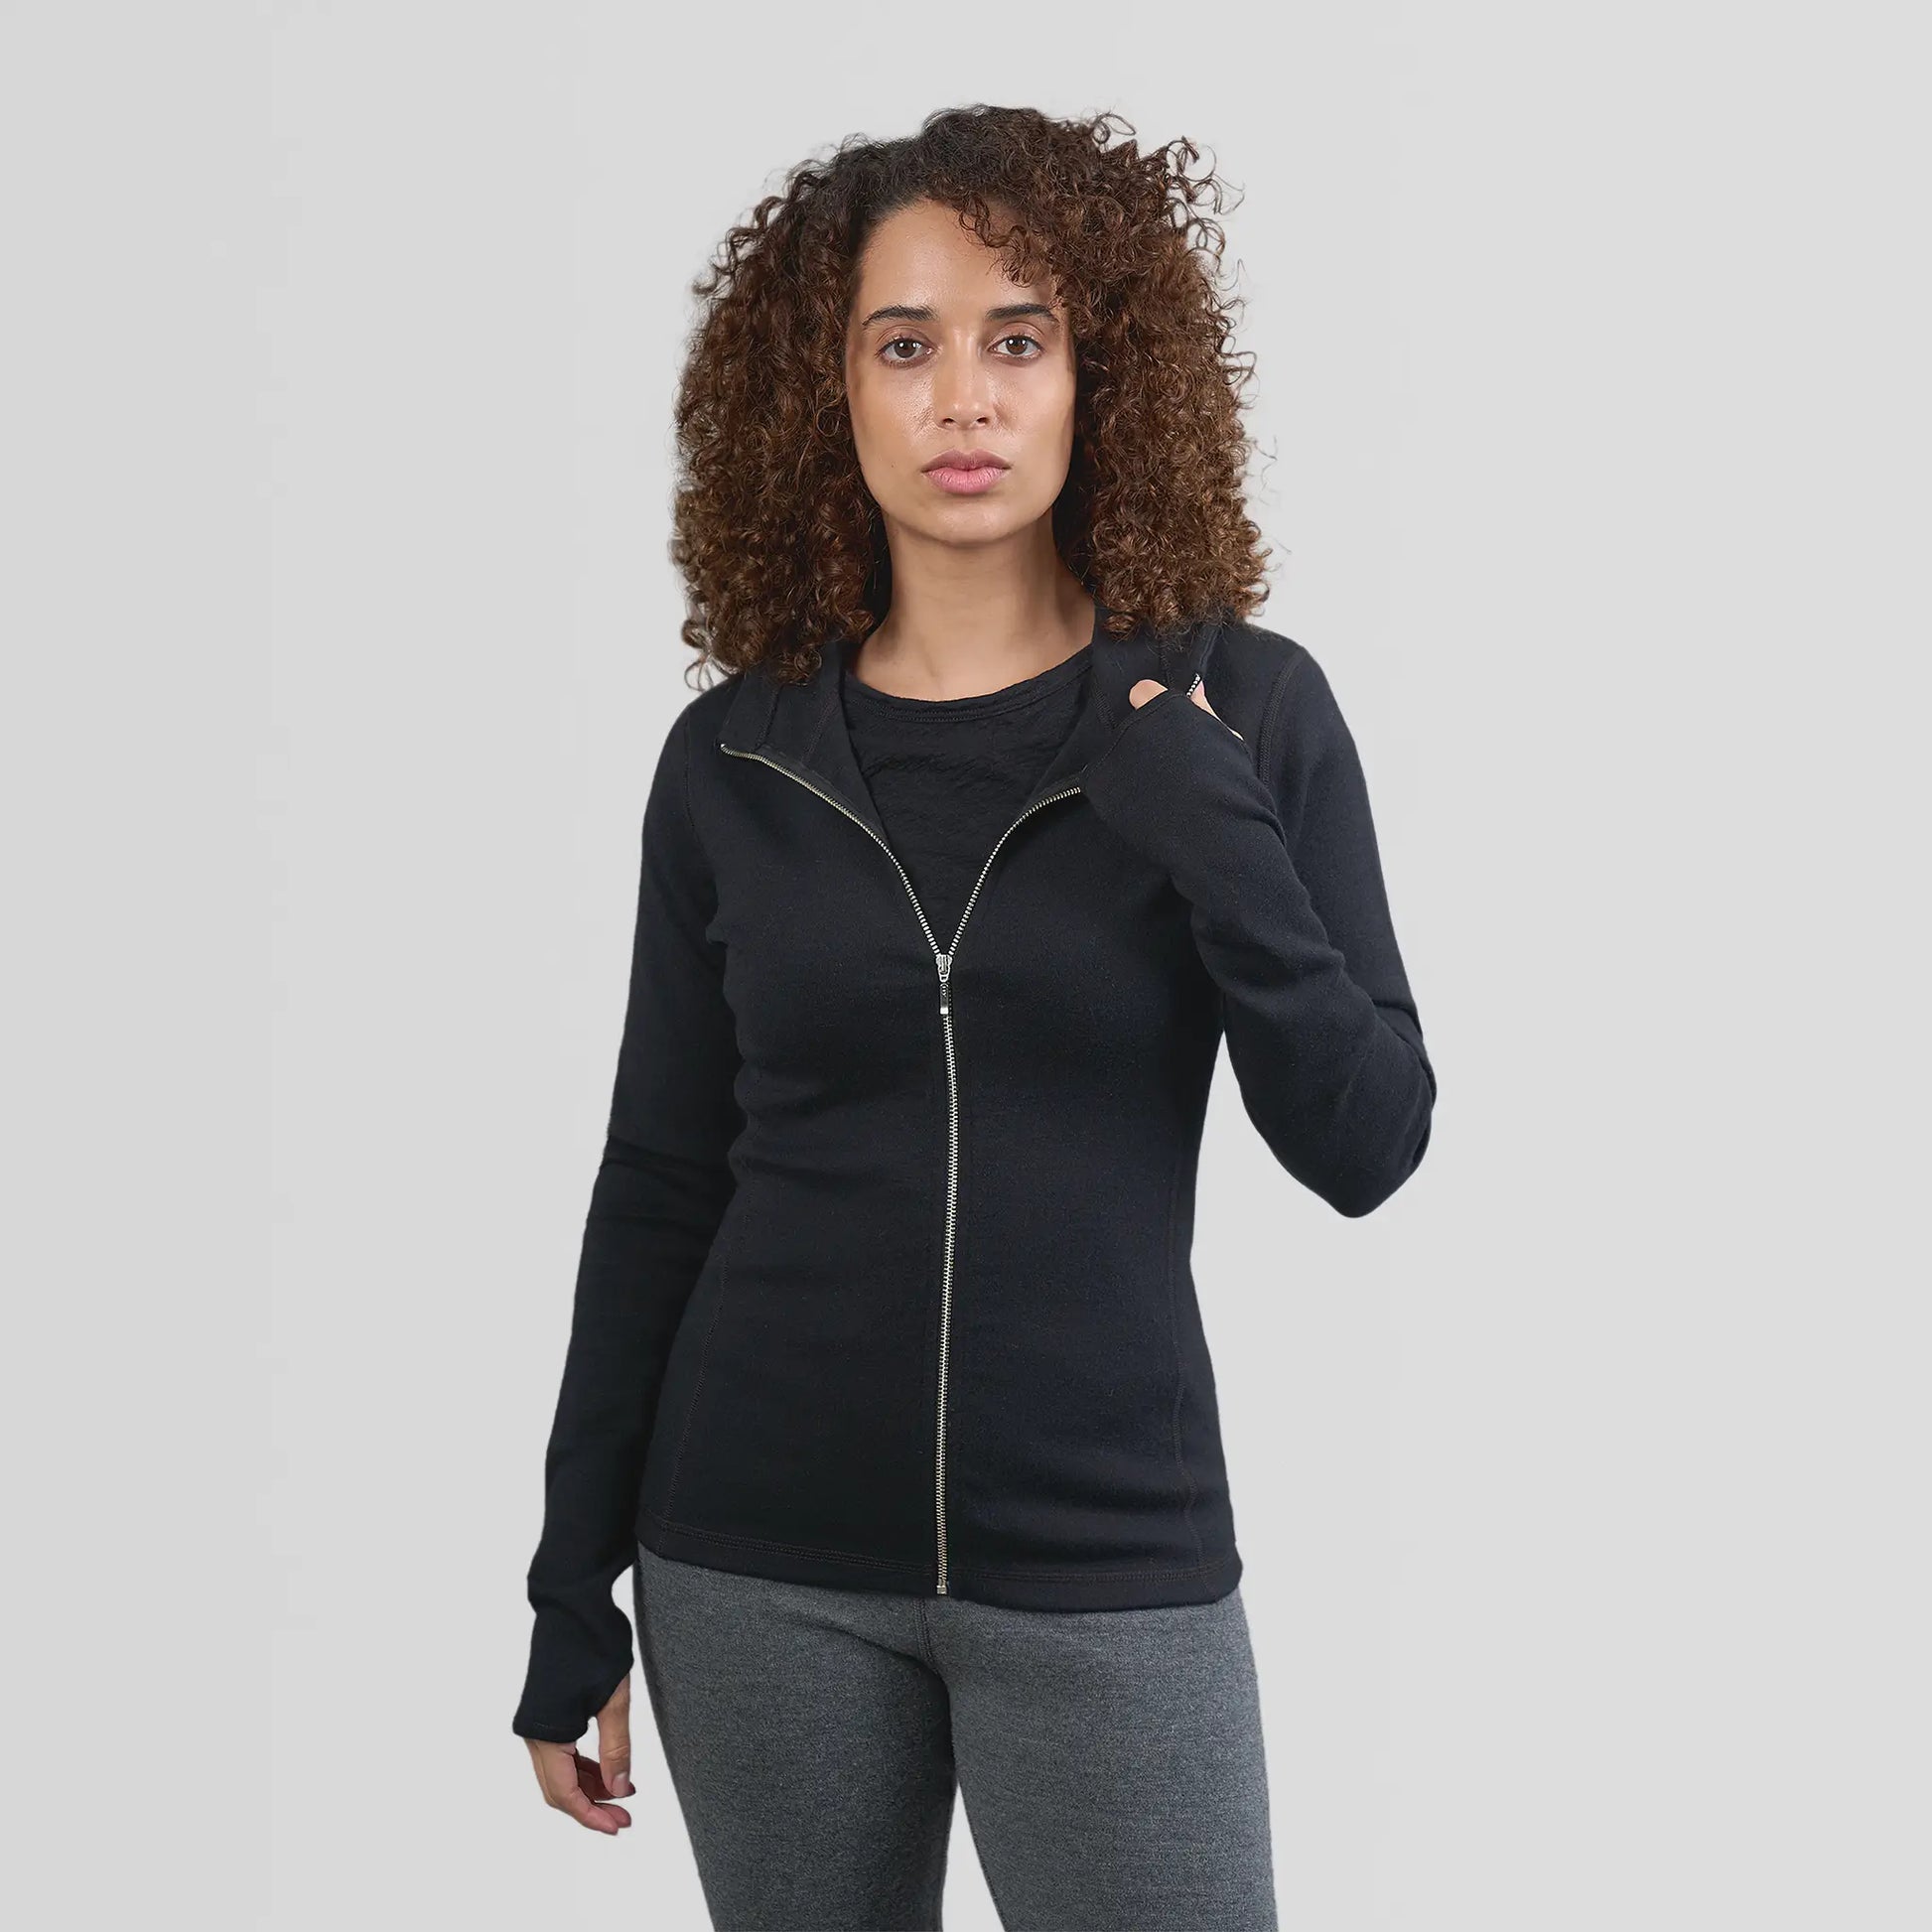 100% Heavy Cotton Womens Crewneck Pullover Sweatshirt Made in Canada